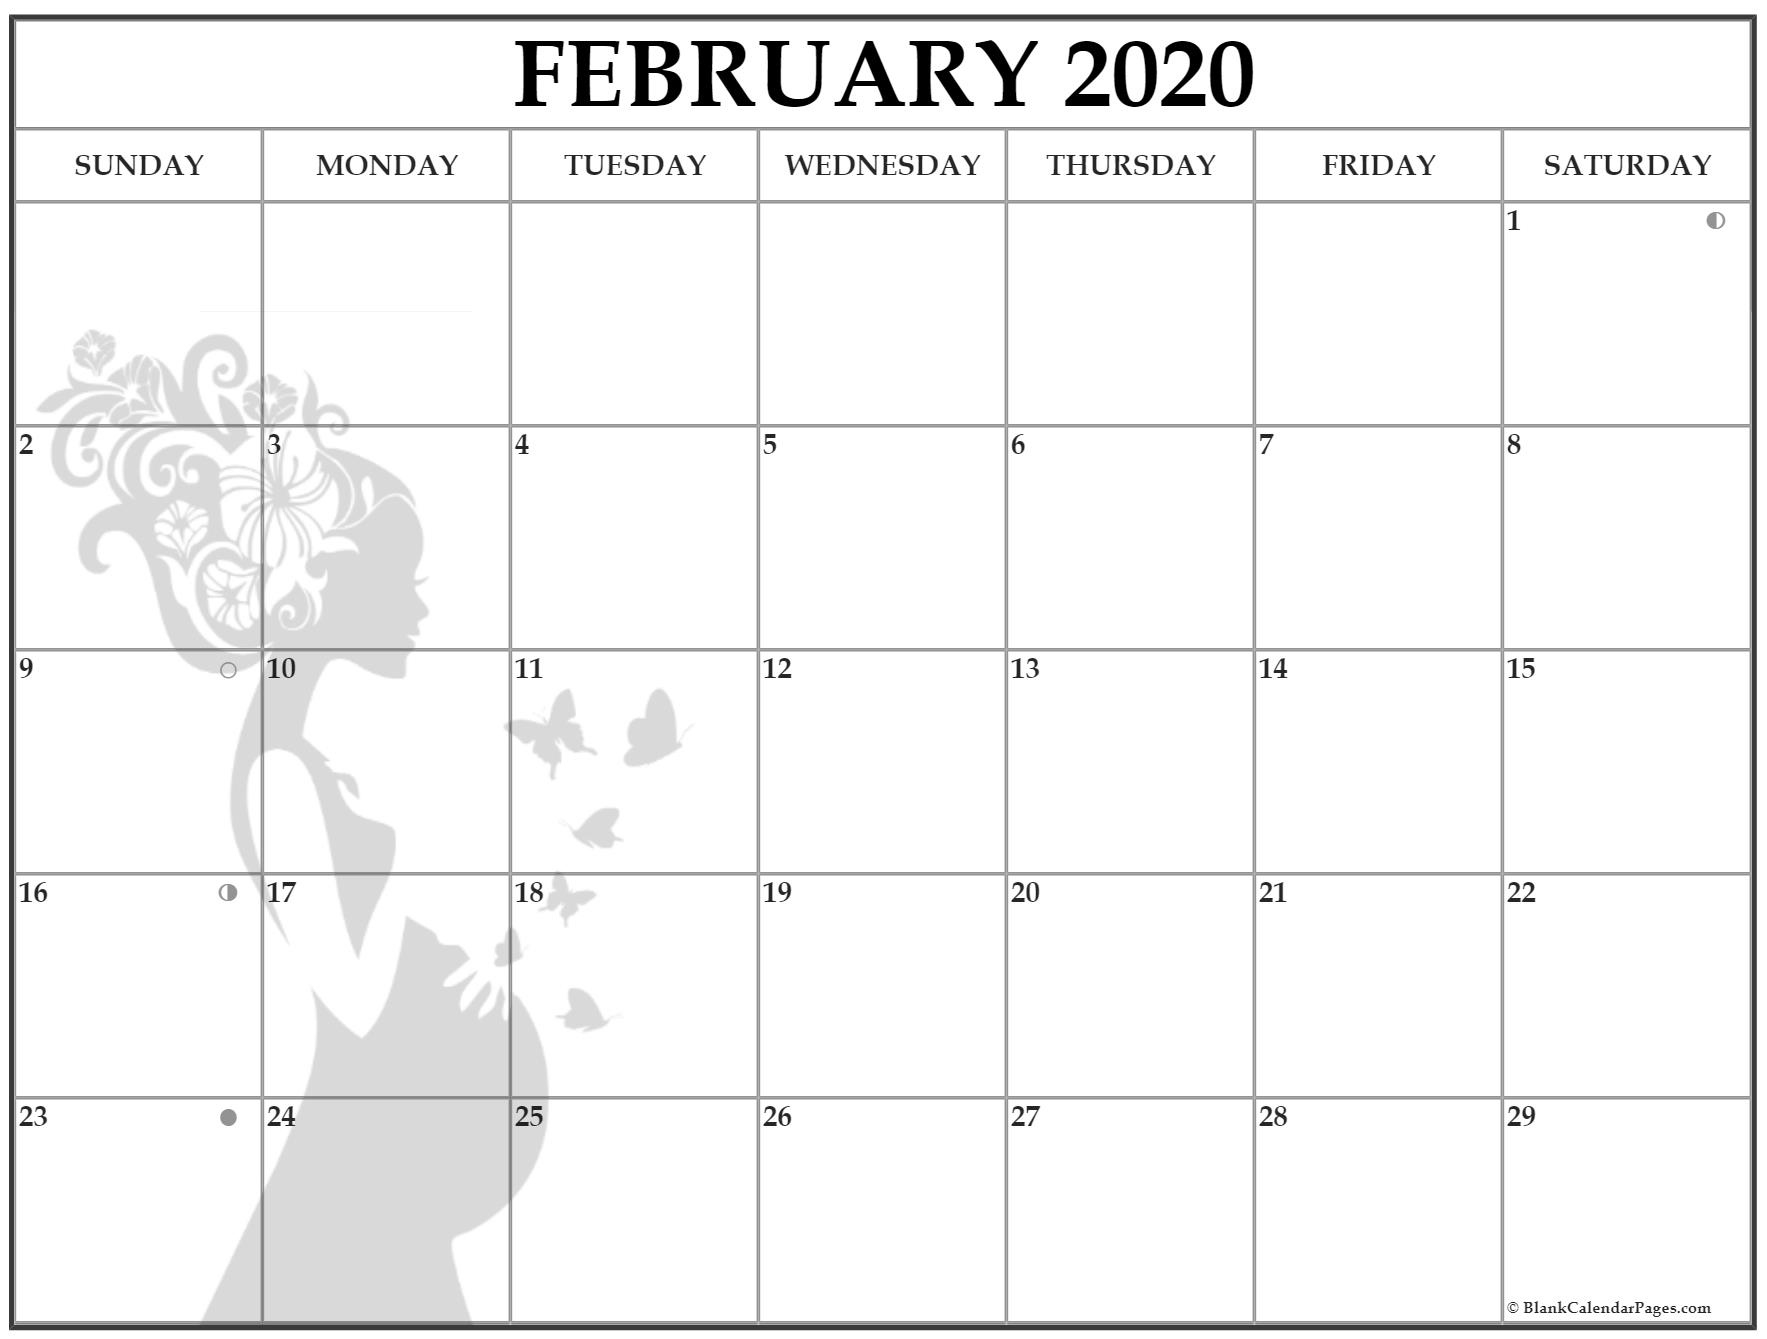 February 2020 Pregnancy Calendar | Fertility Calendar 2020 Calendar With Moon Phases